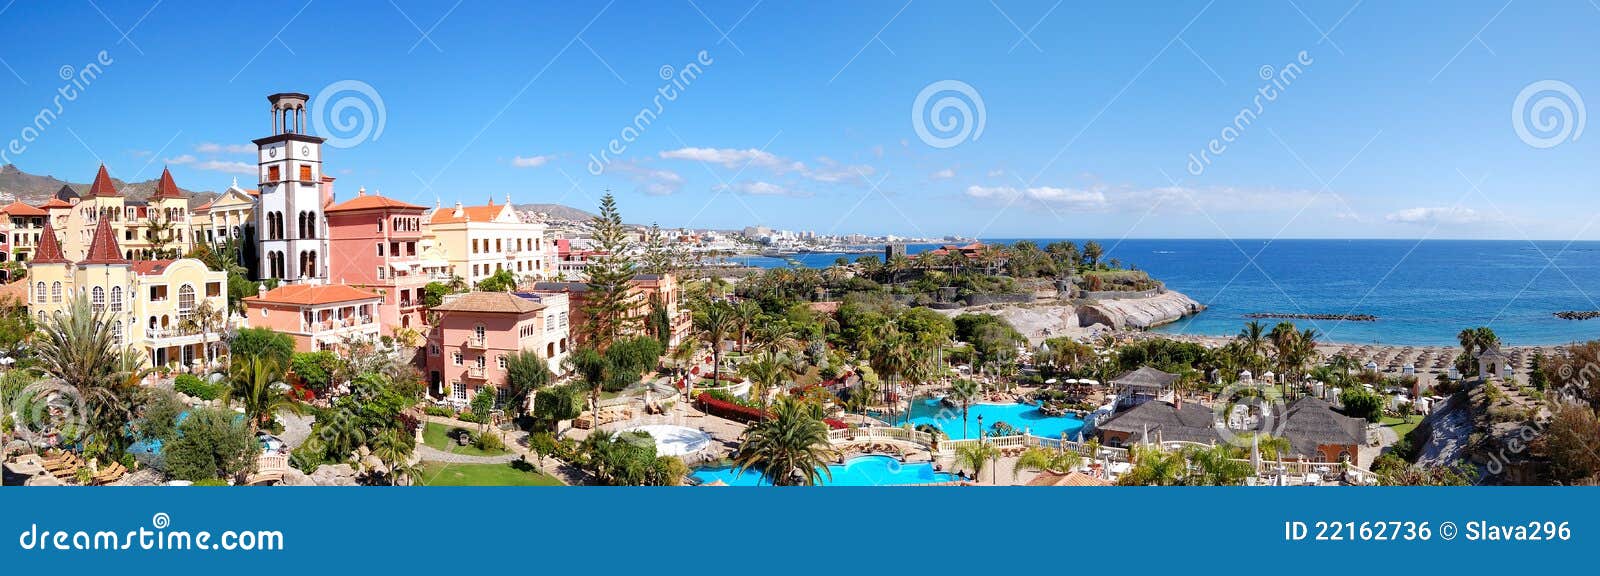 panorama of luxury hotel and playa de las americas